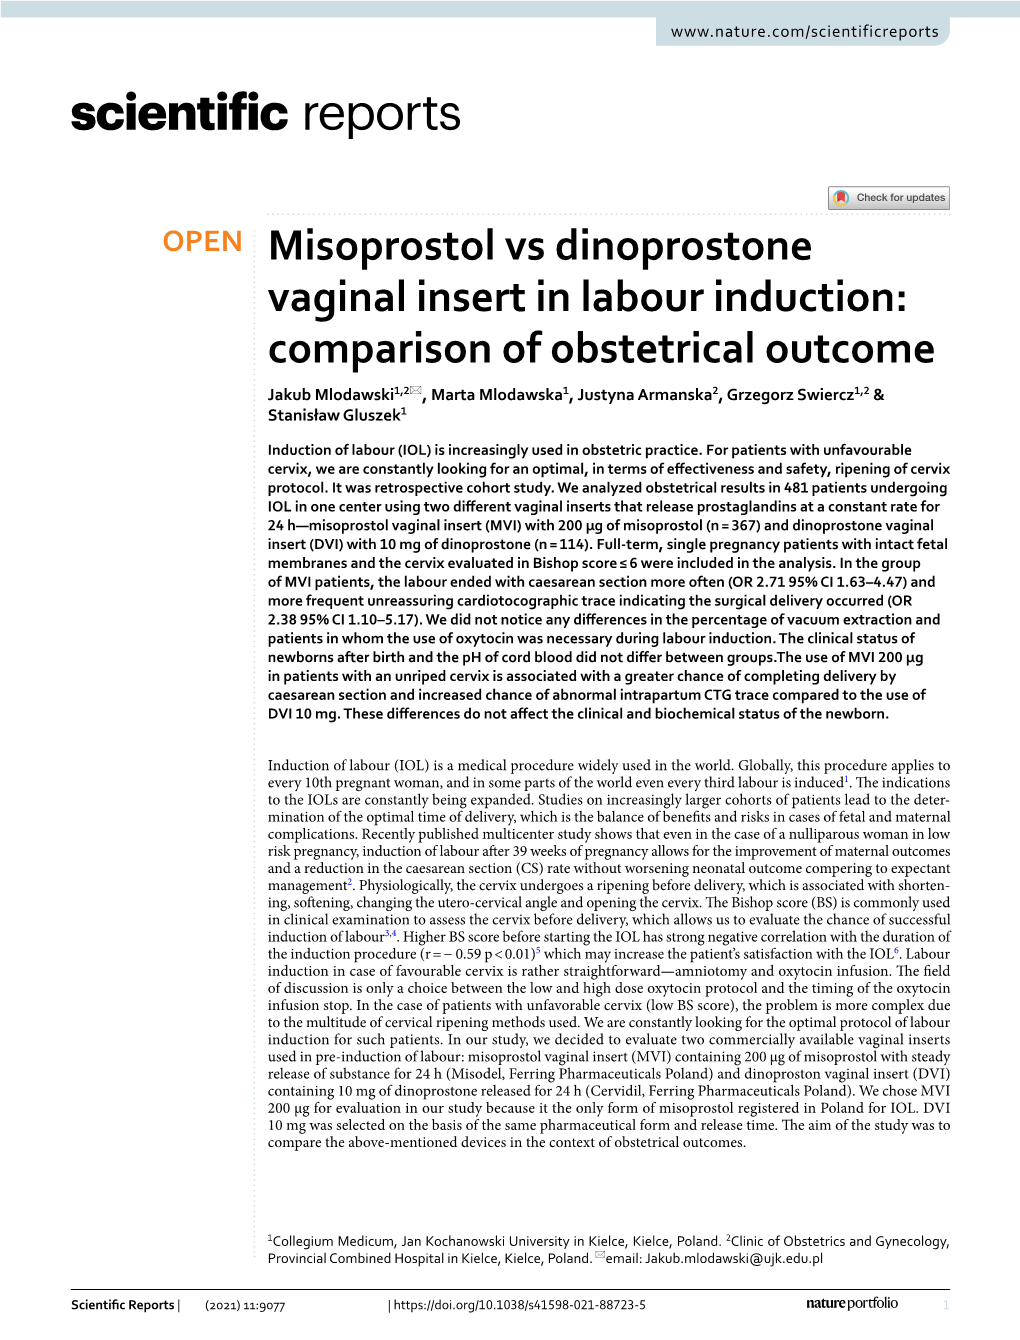 Misoprostol Vs Dinoprostone Vaginal Insert in Labour Induction